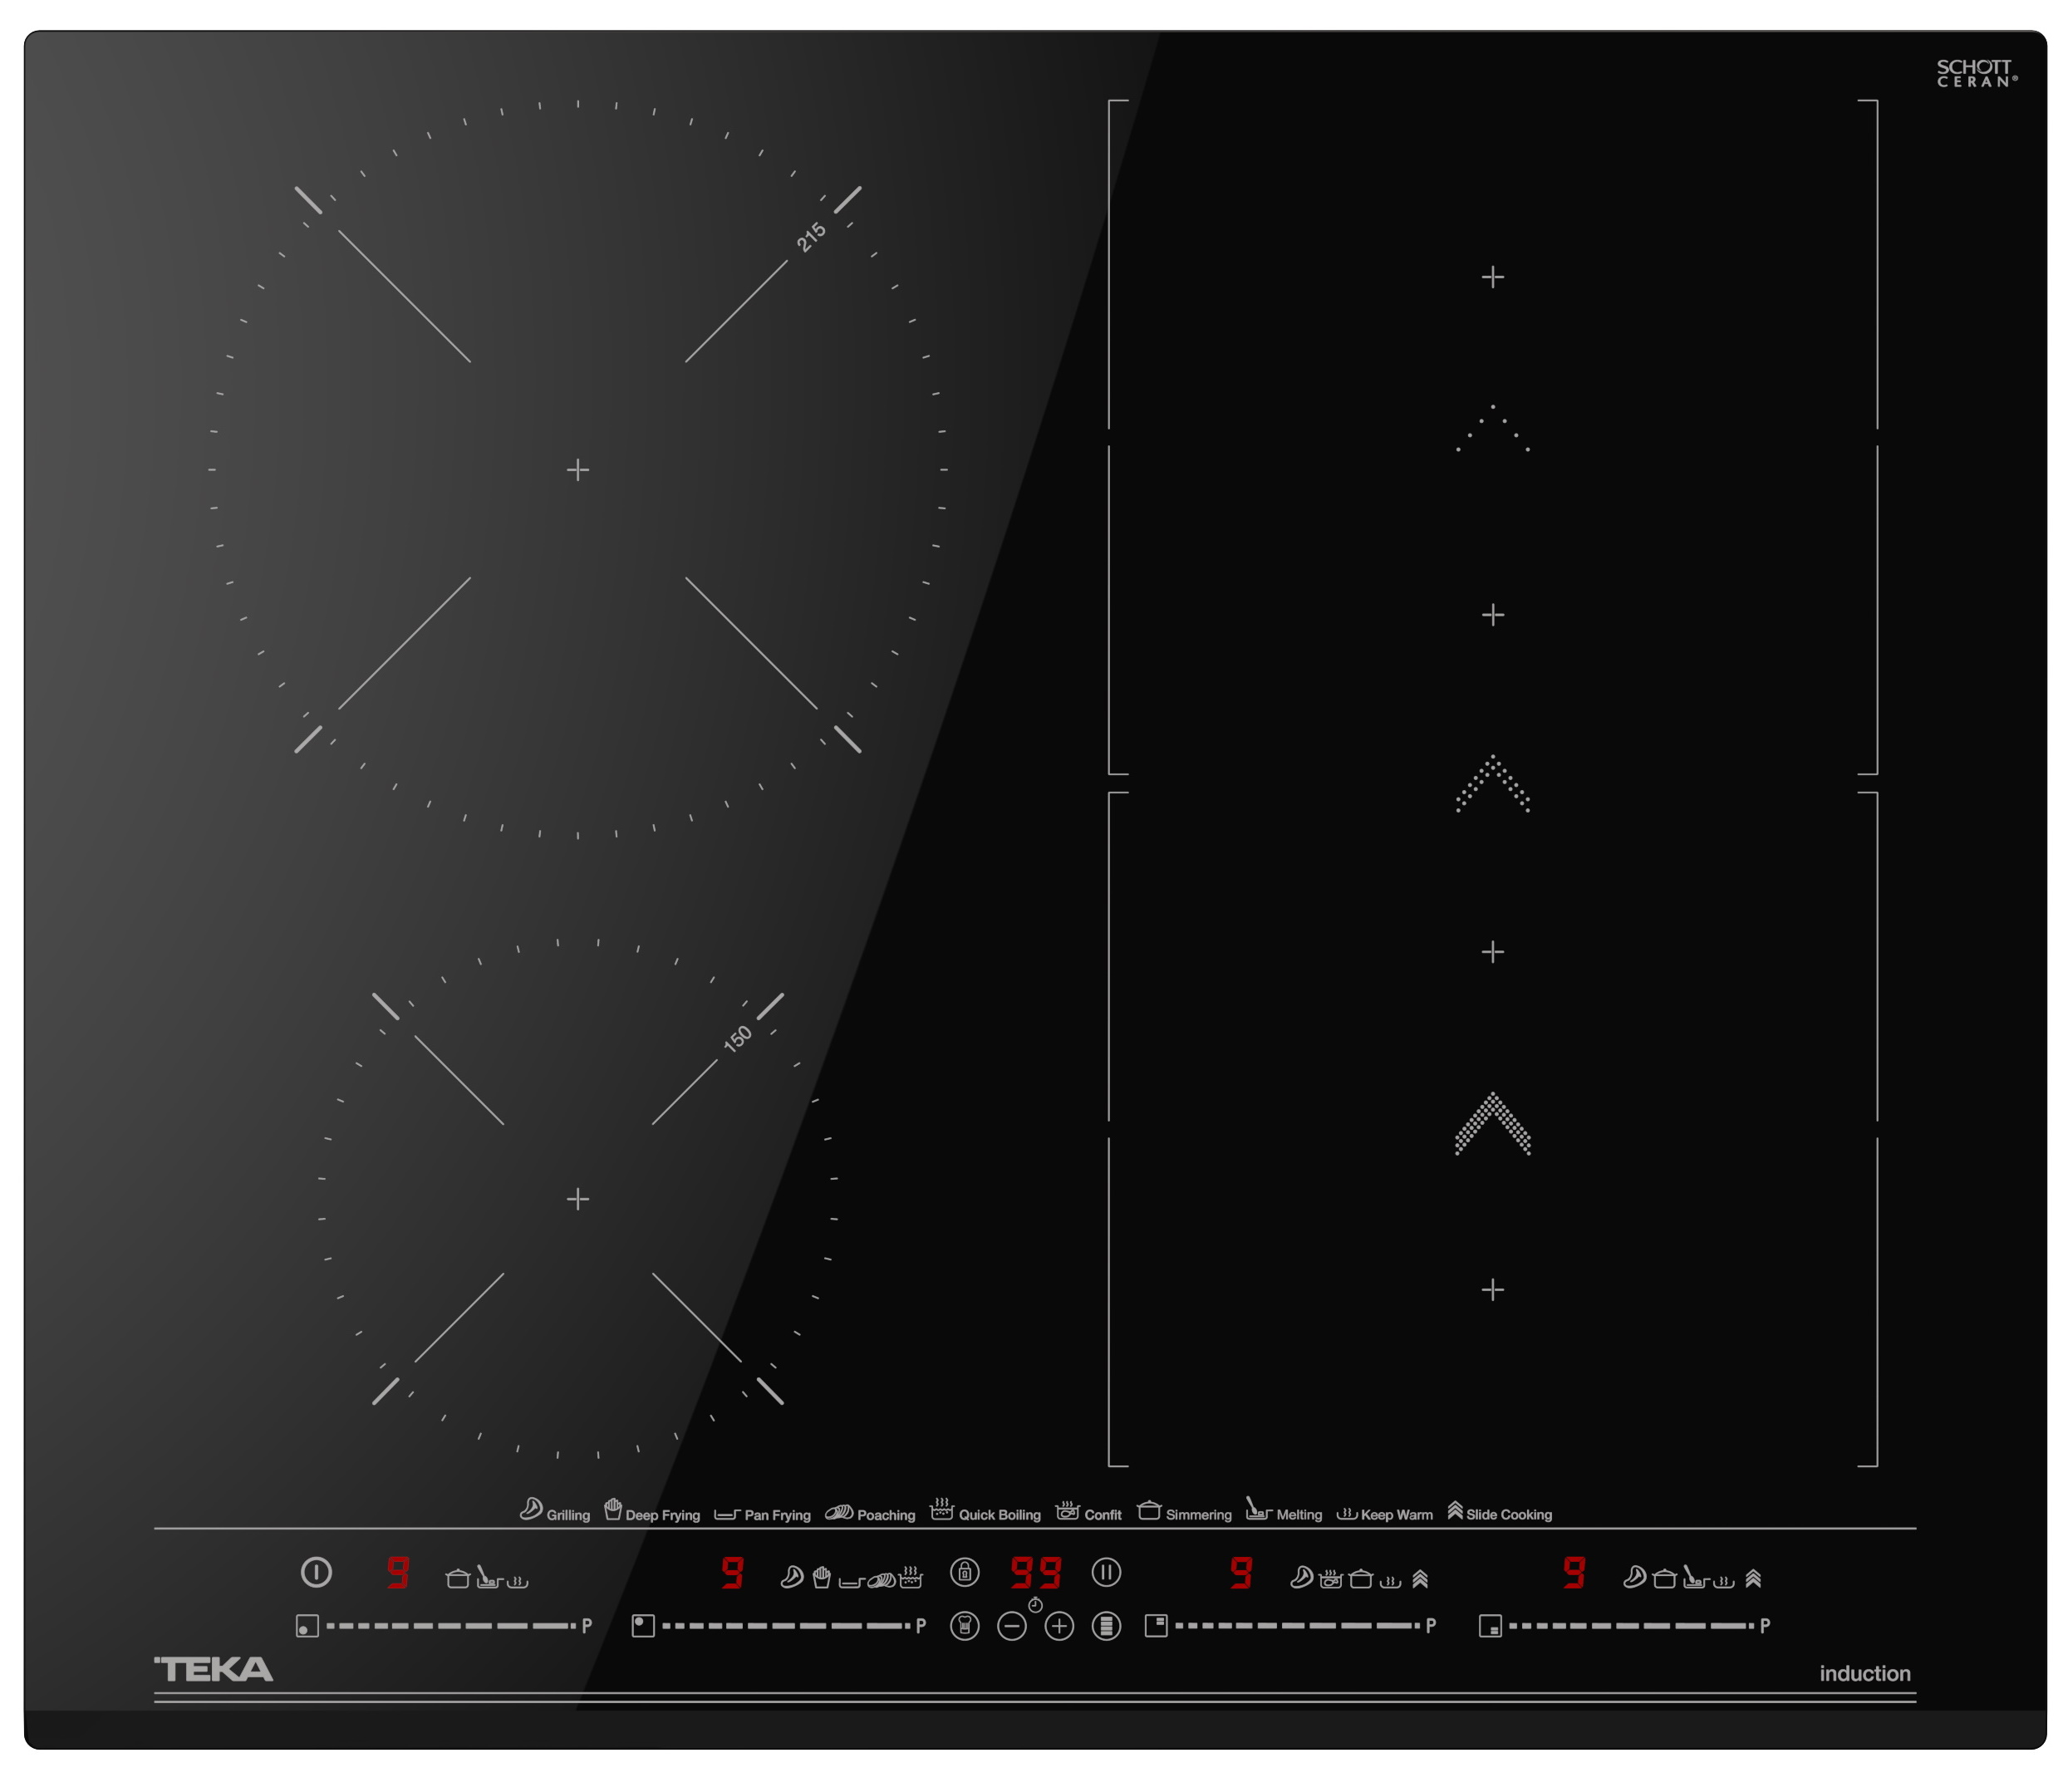 Plita inductie incorporabila Teka IZS 66800 cu 4 zone 60cm Flex SlideCooking Cristal negru sensodays.ro